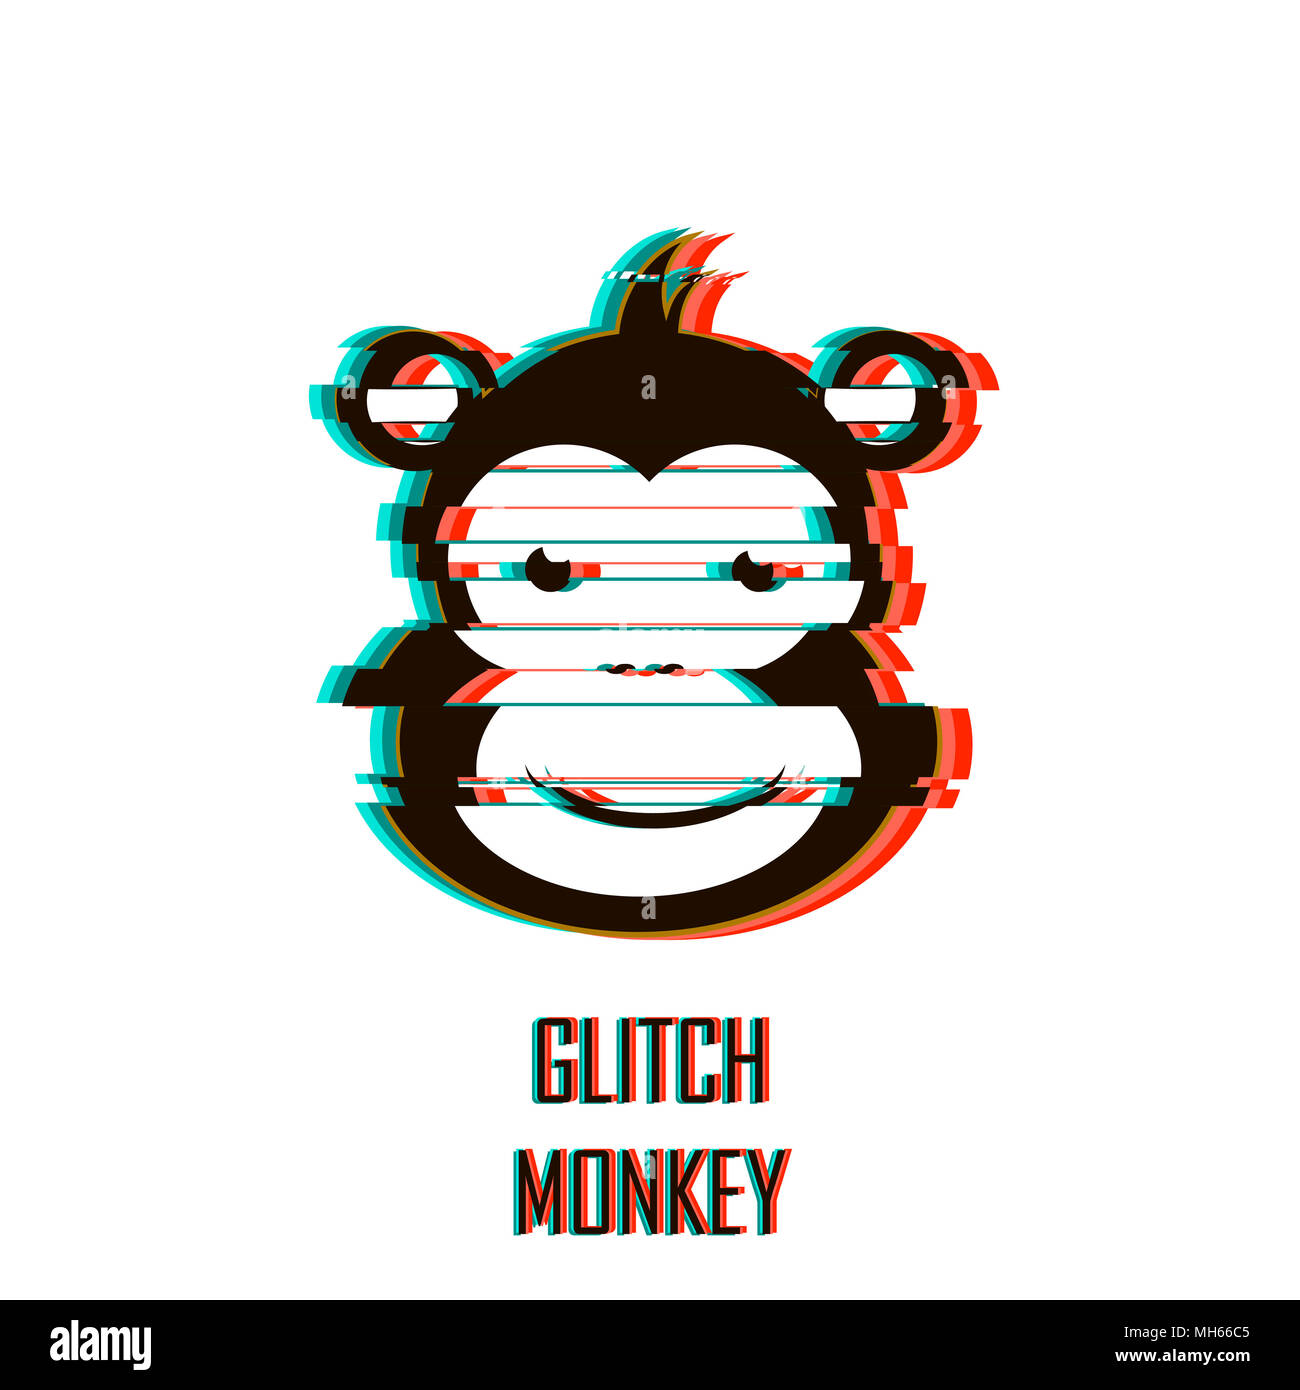 Emoji monkey illustration with TV glitch effect. Cartoon style vector icon. Stock Photo